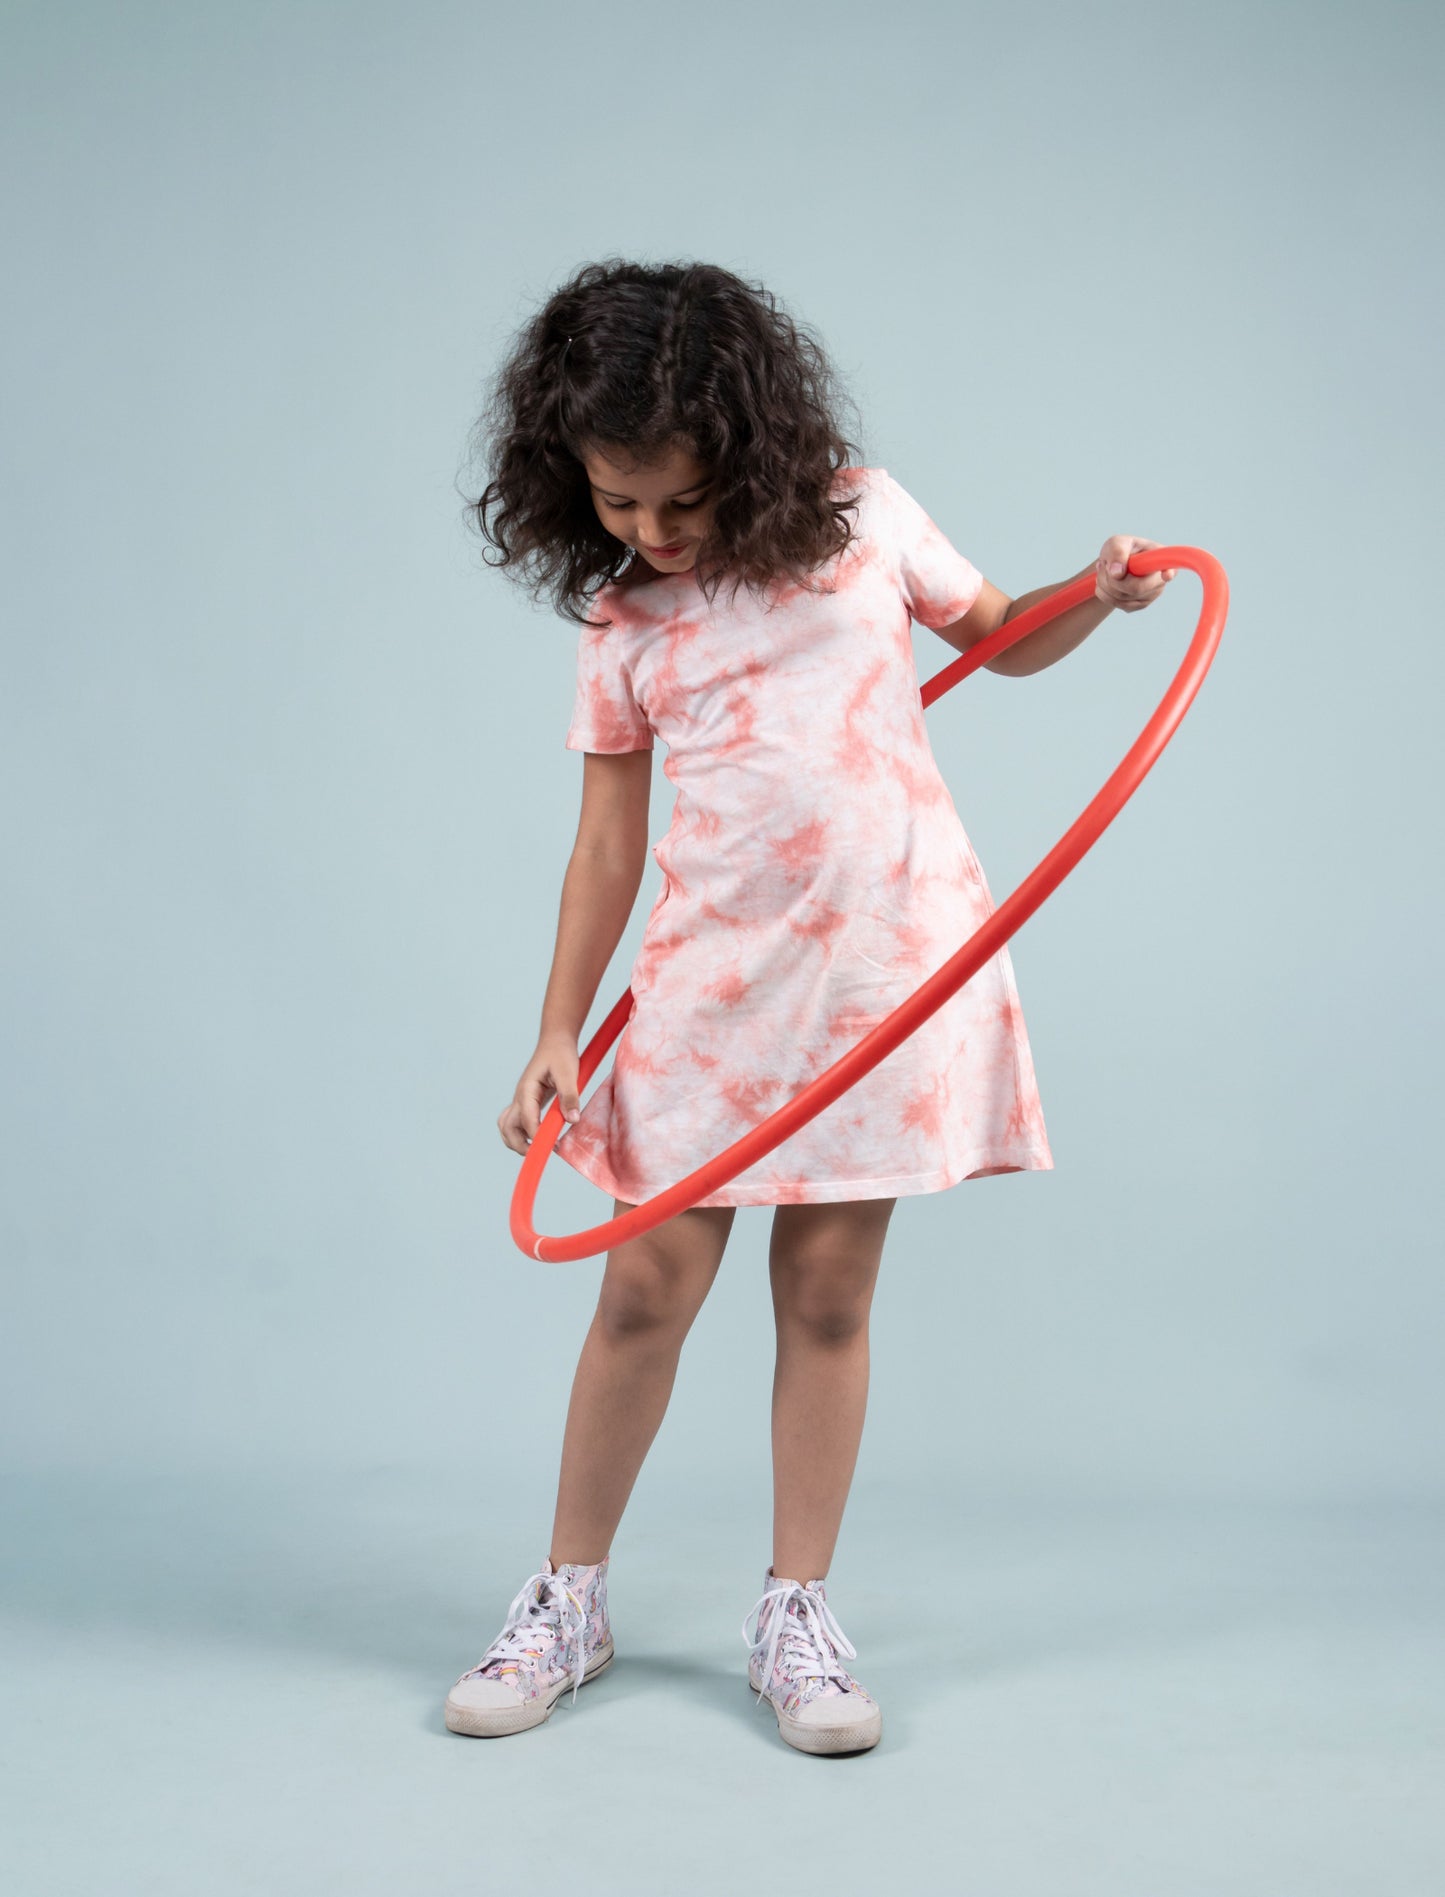 Girls Kids Tie-Dye A-Line Summer Dress With Pocket (Rose Pink)